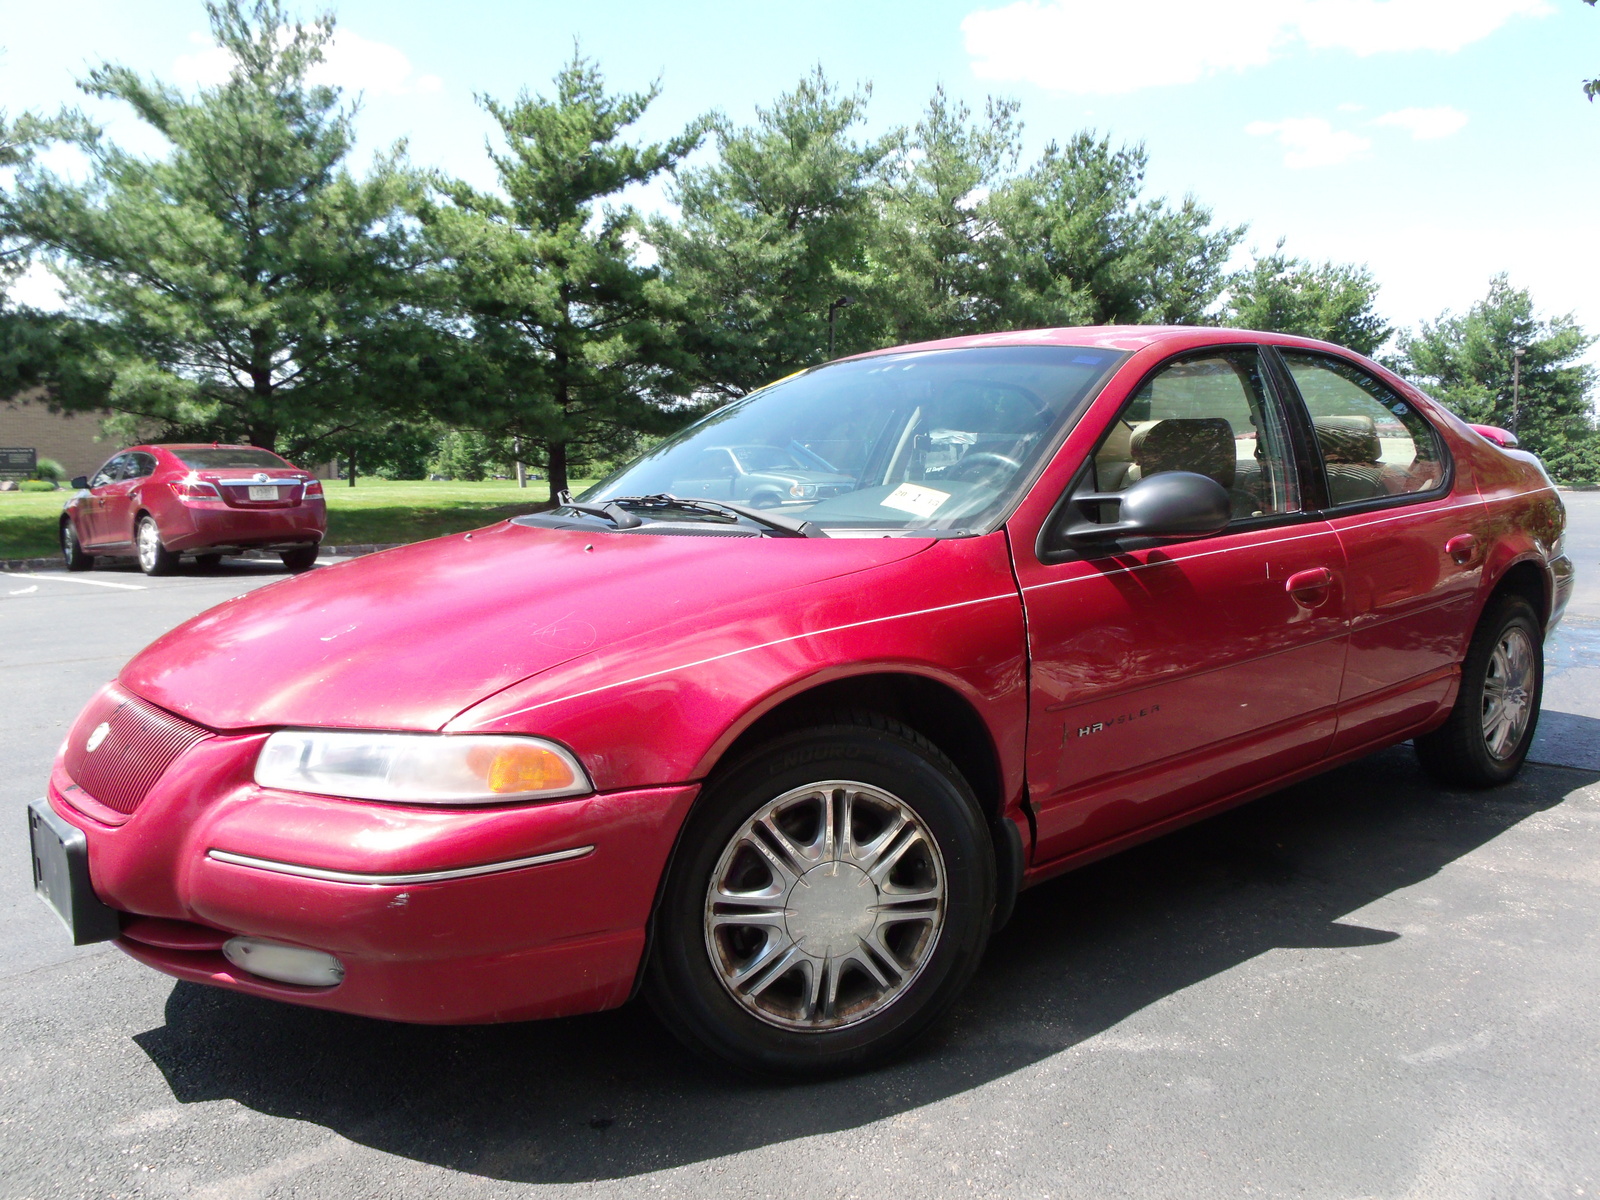 1997 Chrysler cirrus lxi review #2